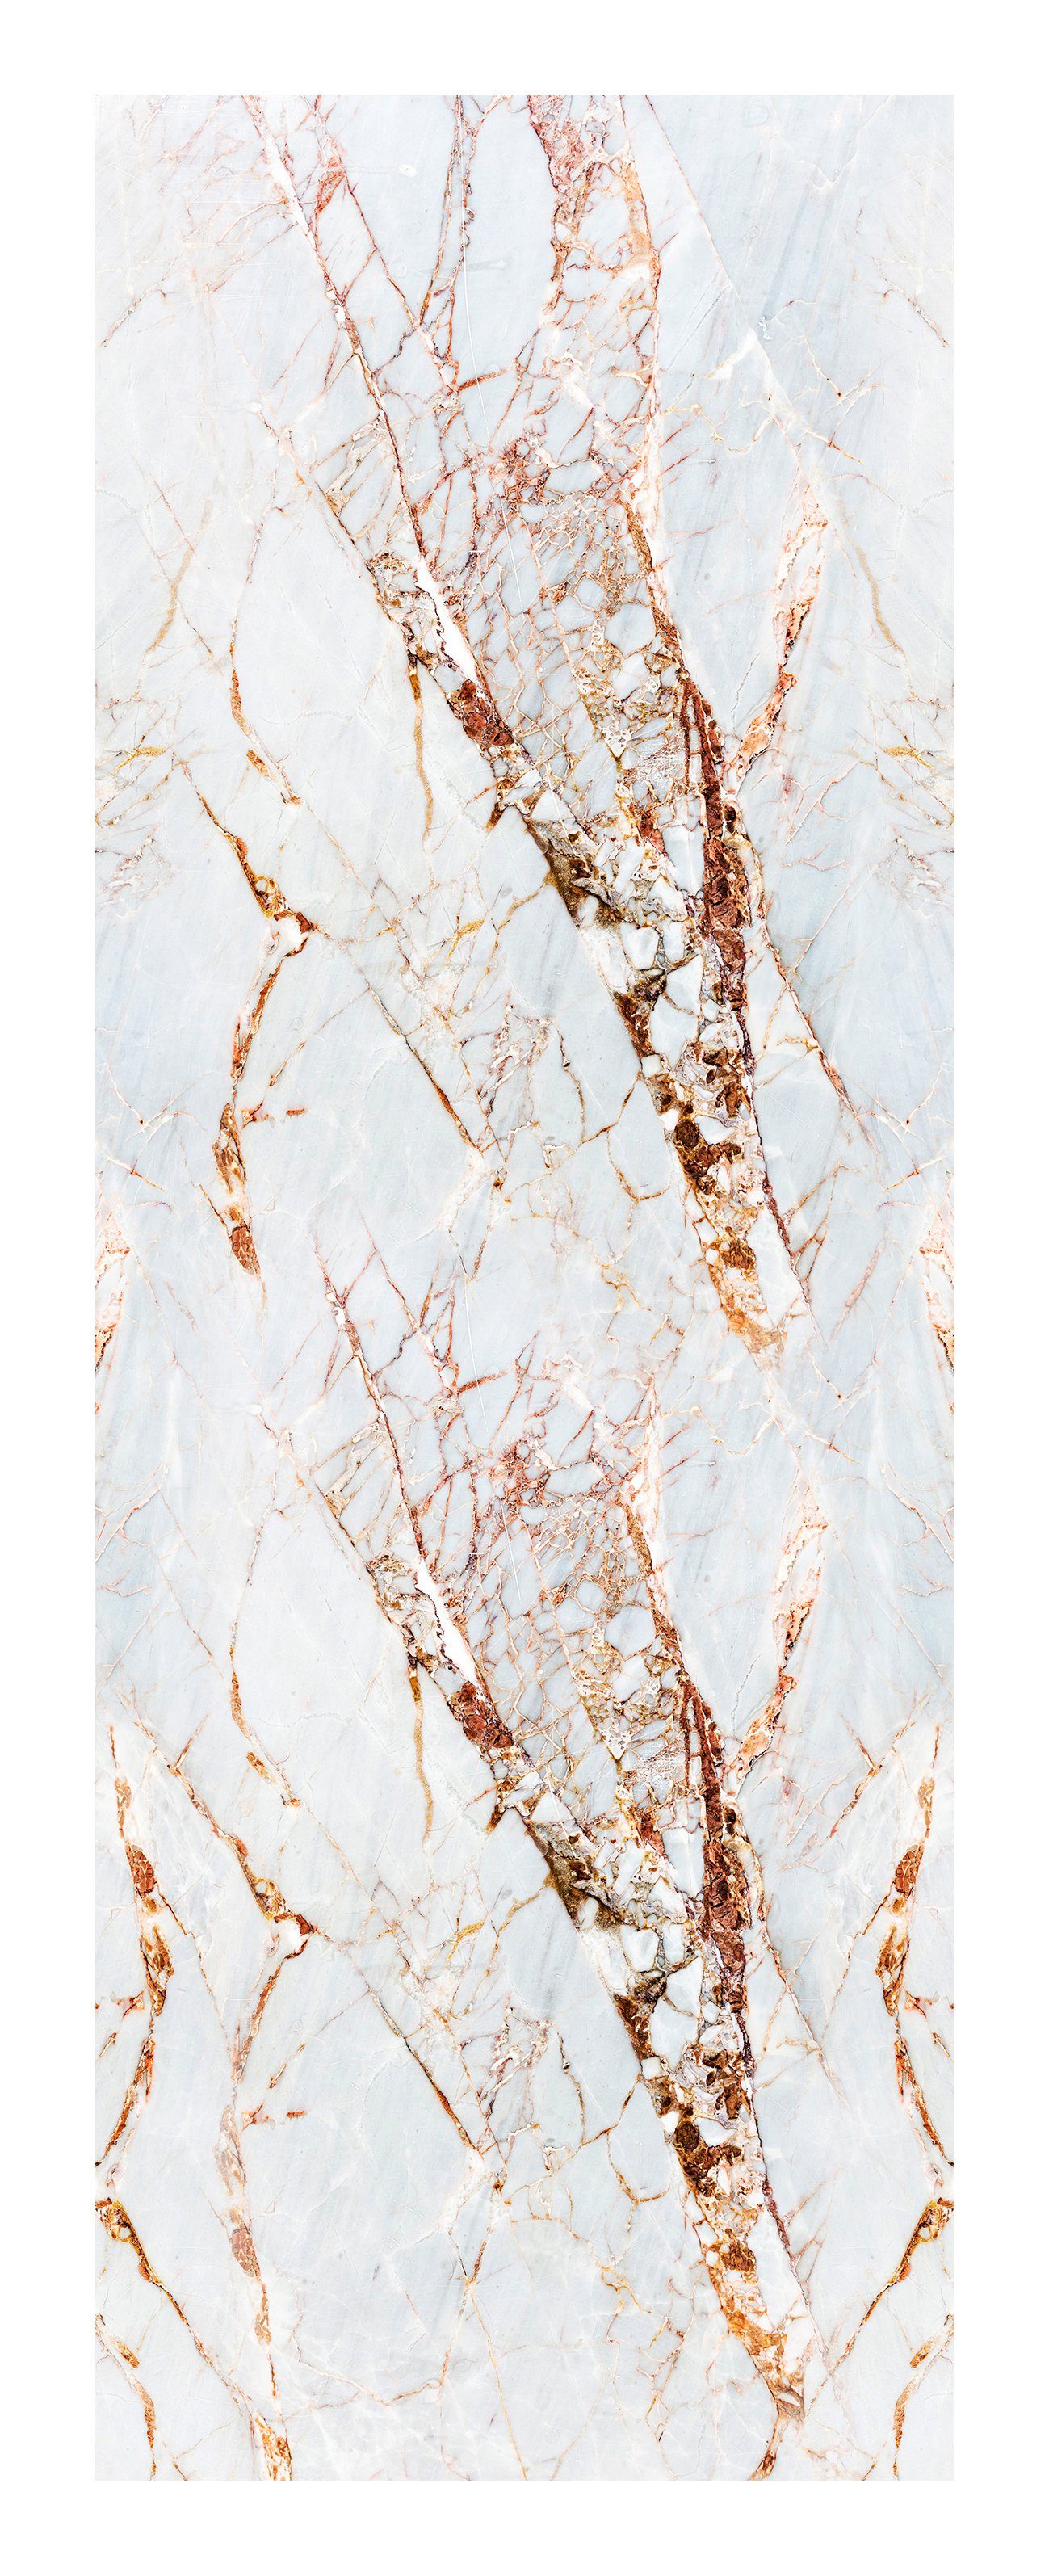 queence Vinyltapete Marmor-Weiß, selbstklebend cm, 250 90 Steinoptik, x